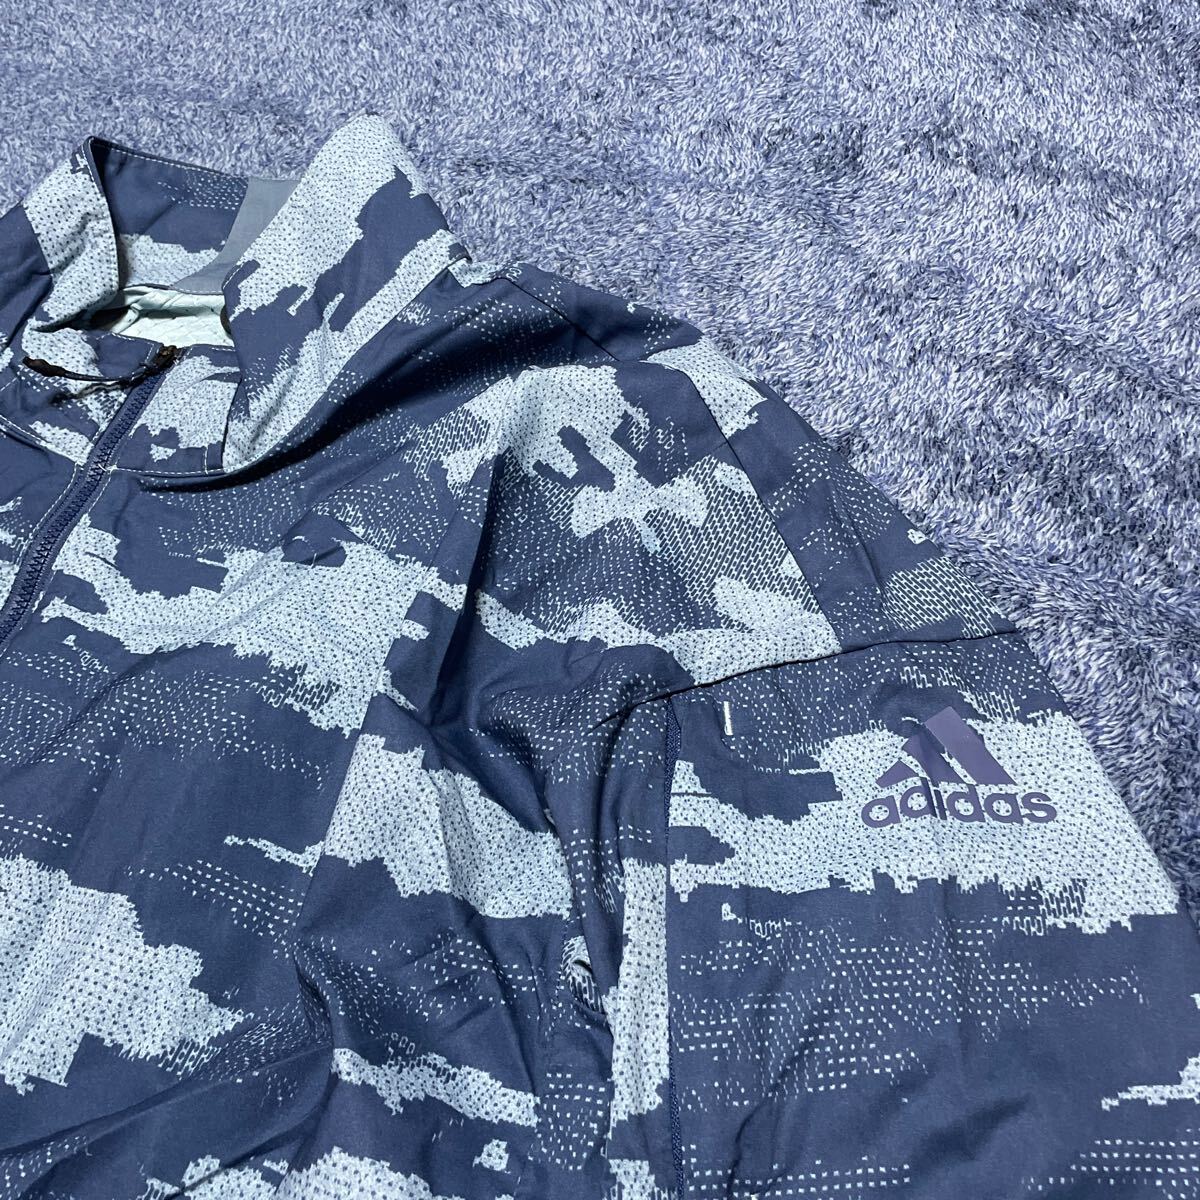  Adidas running wear pa Cub ru storage adidas SnovaTOKYO jacket EDN88 men's size O noble indigo 